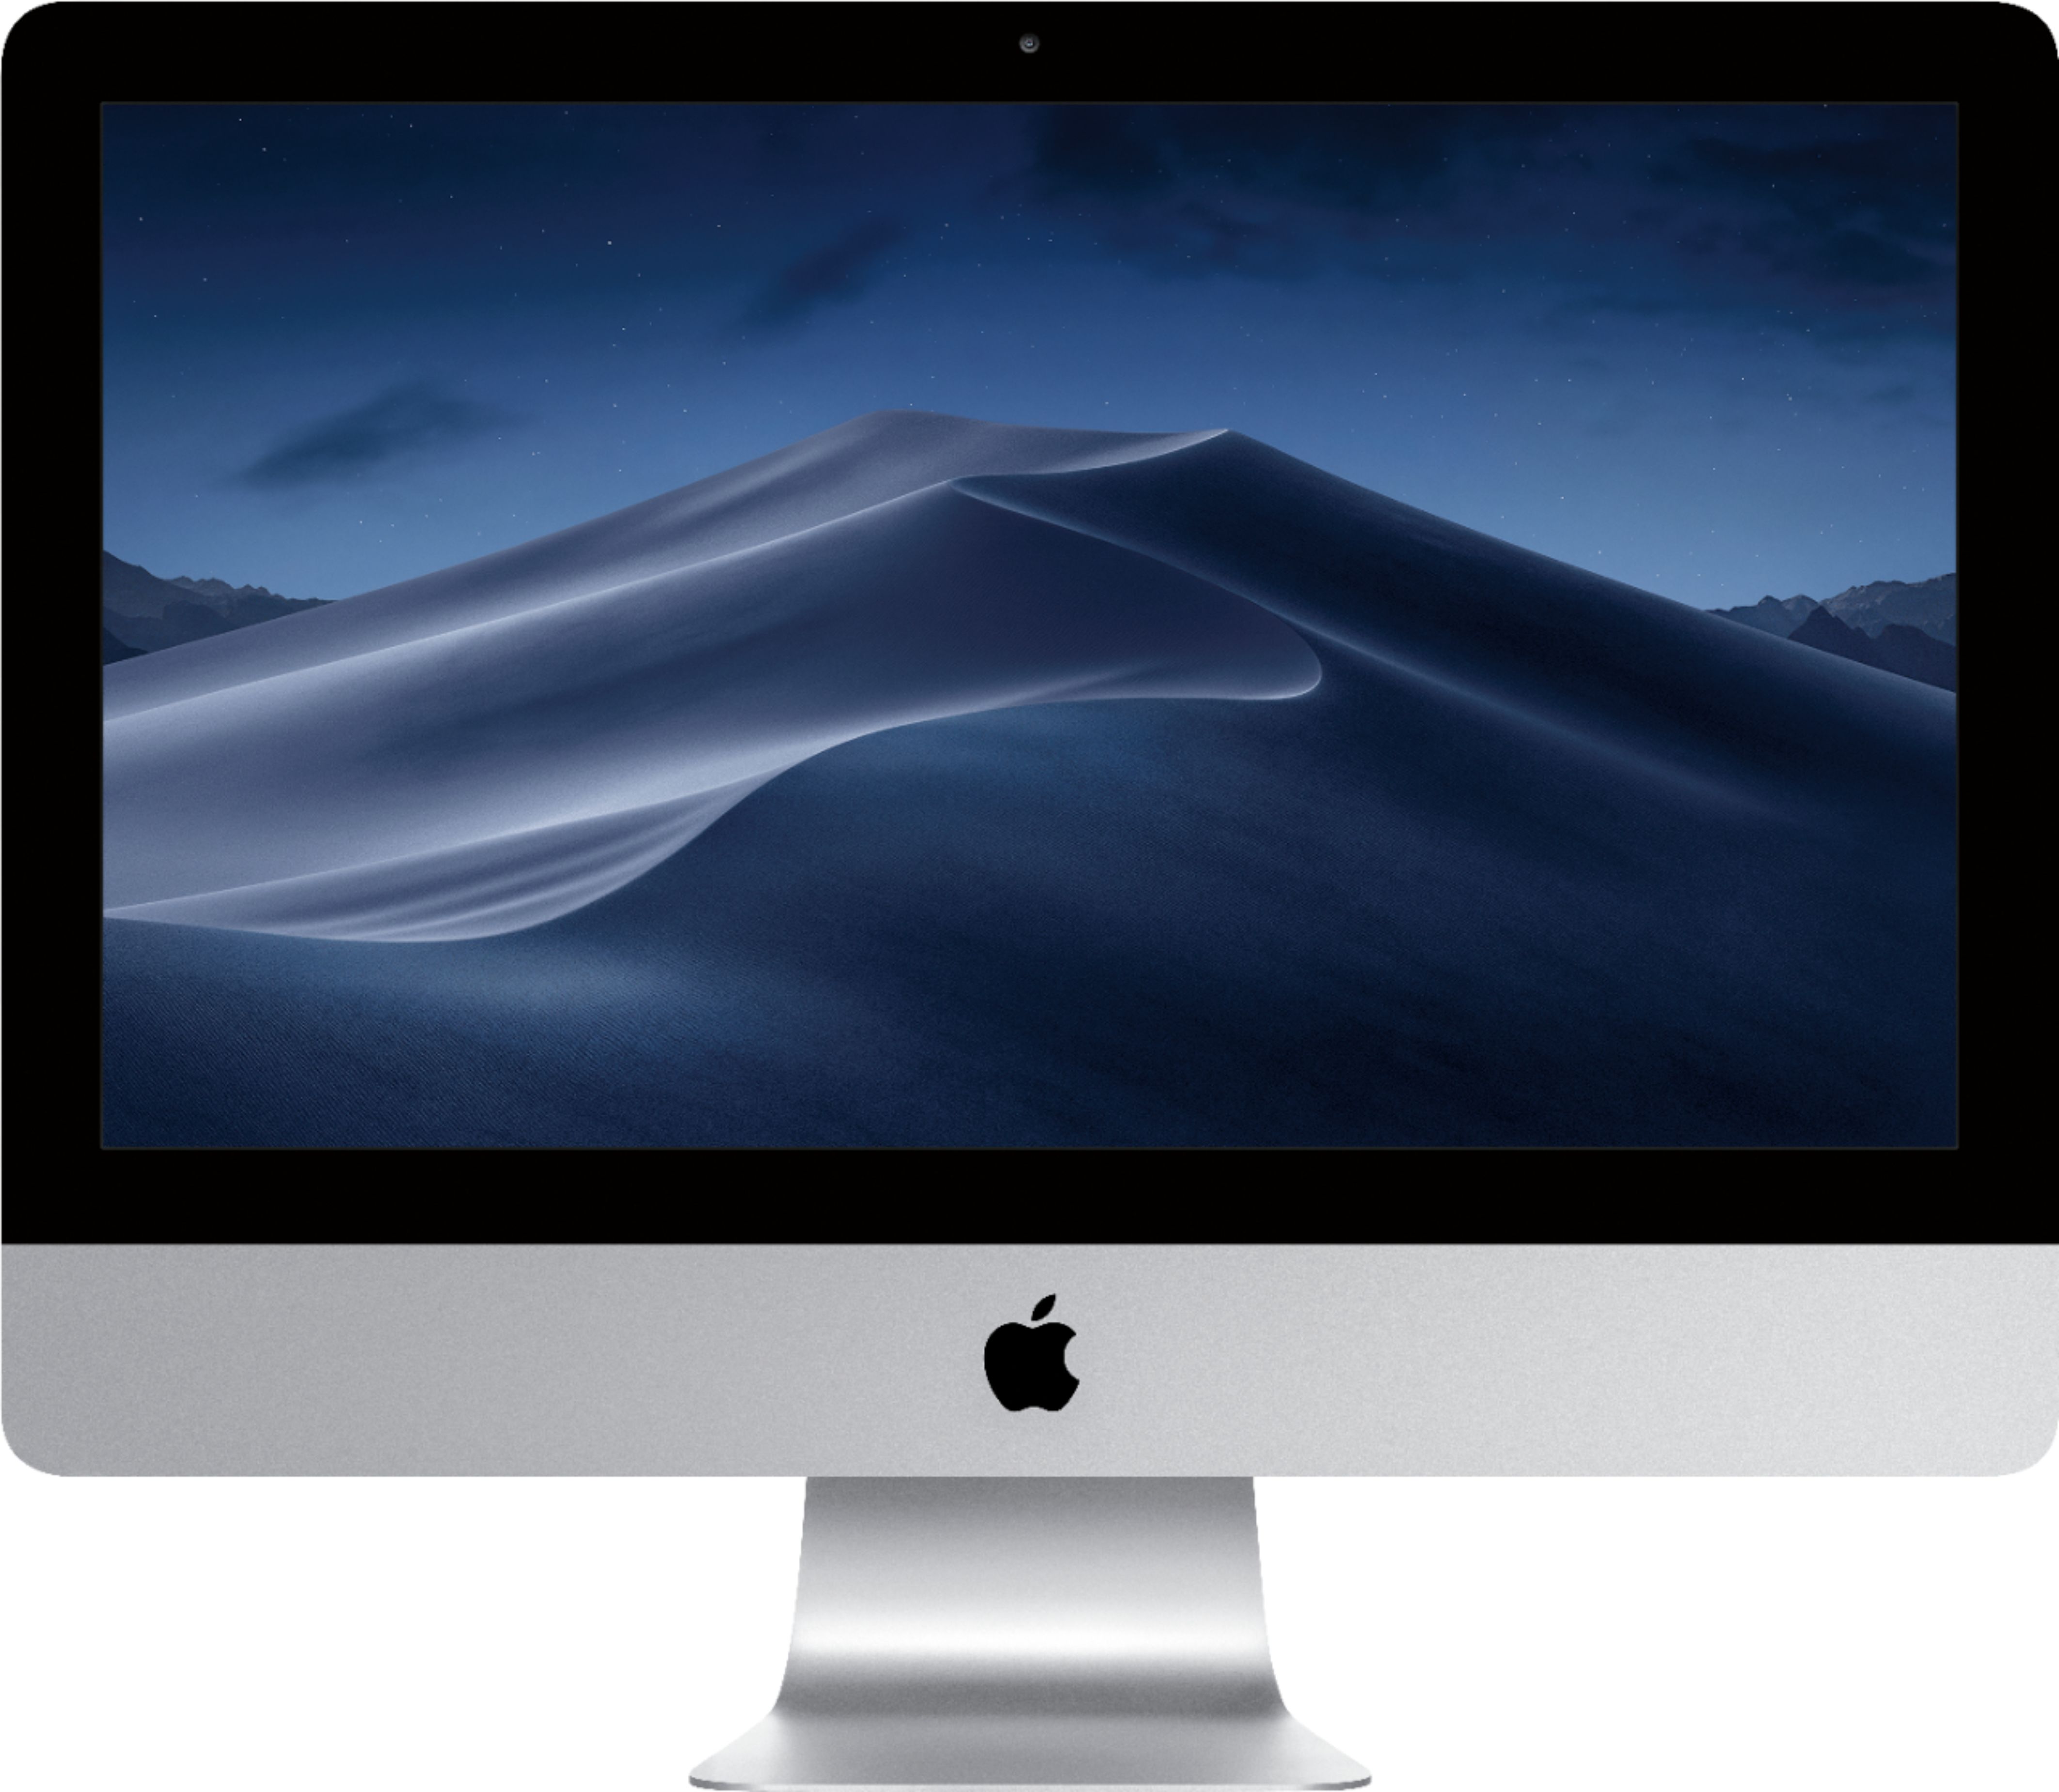 Apple - 21.5" iMac® All-In-One - Intel Core i5 - 16GB Memory - 1TB Hard Drive - Silver